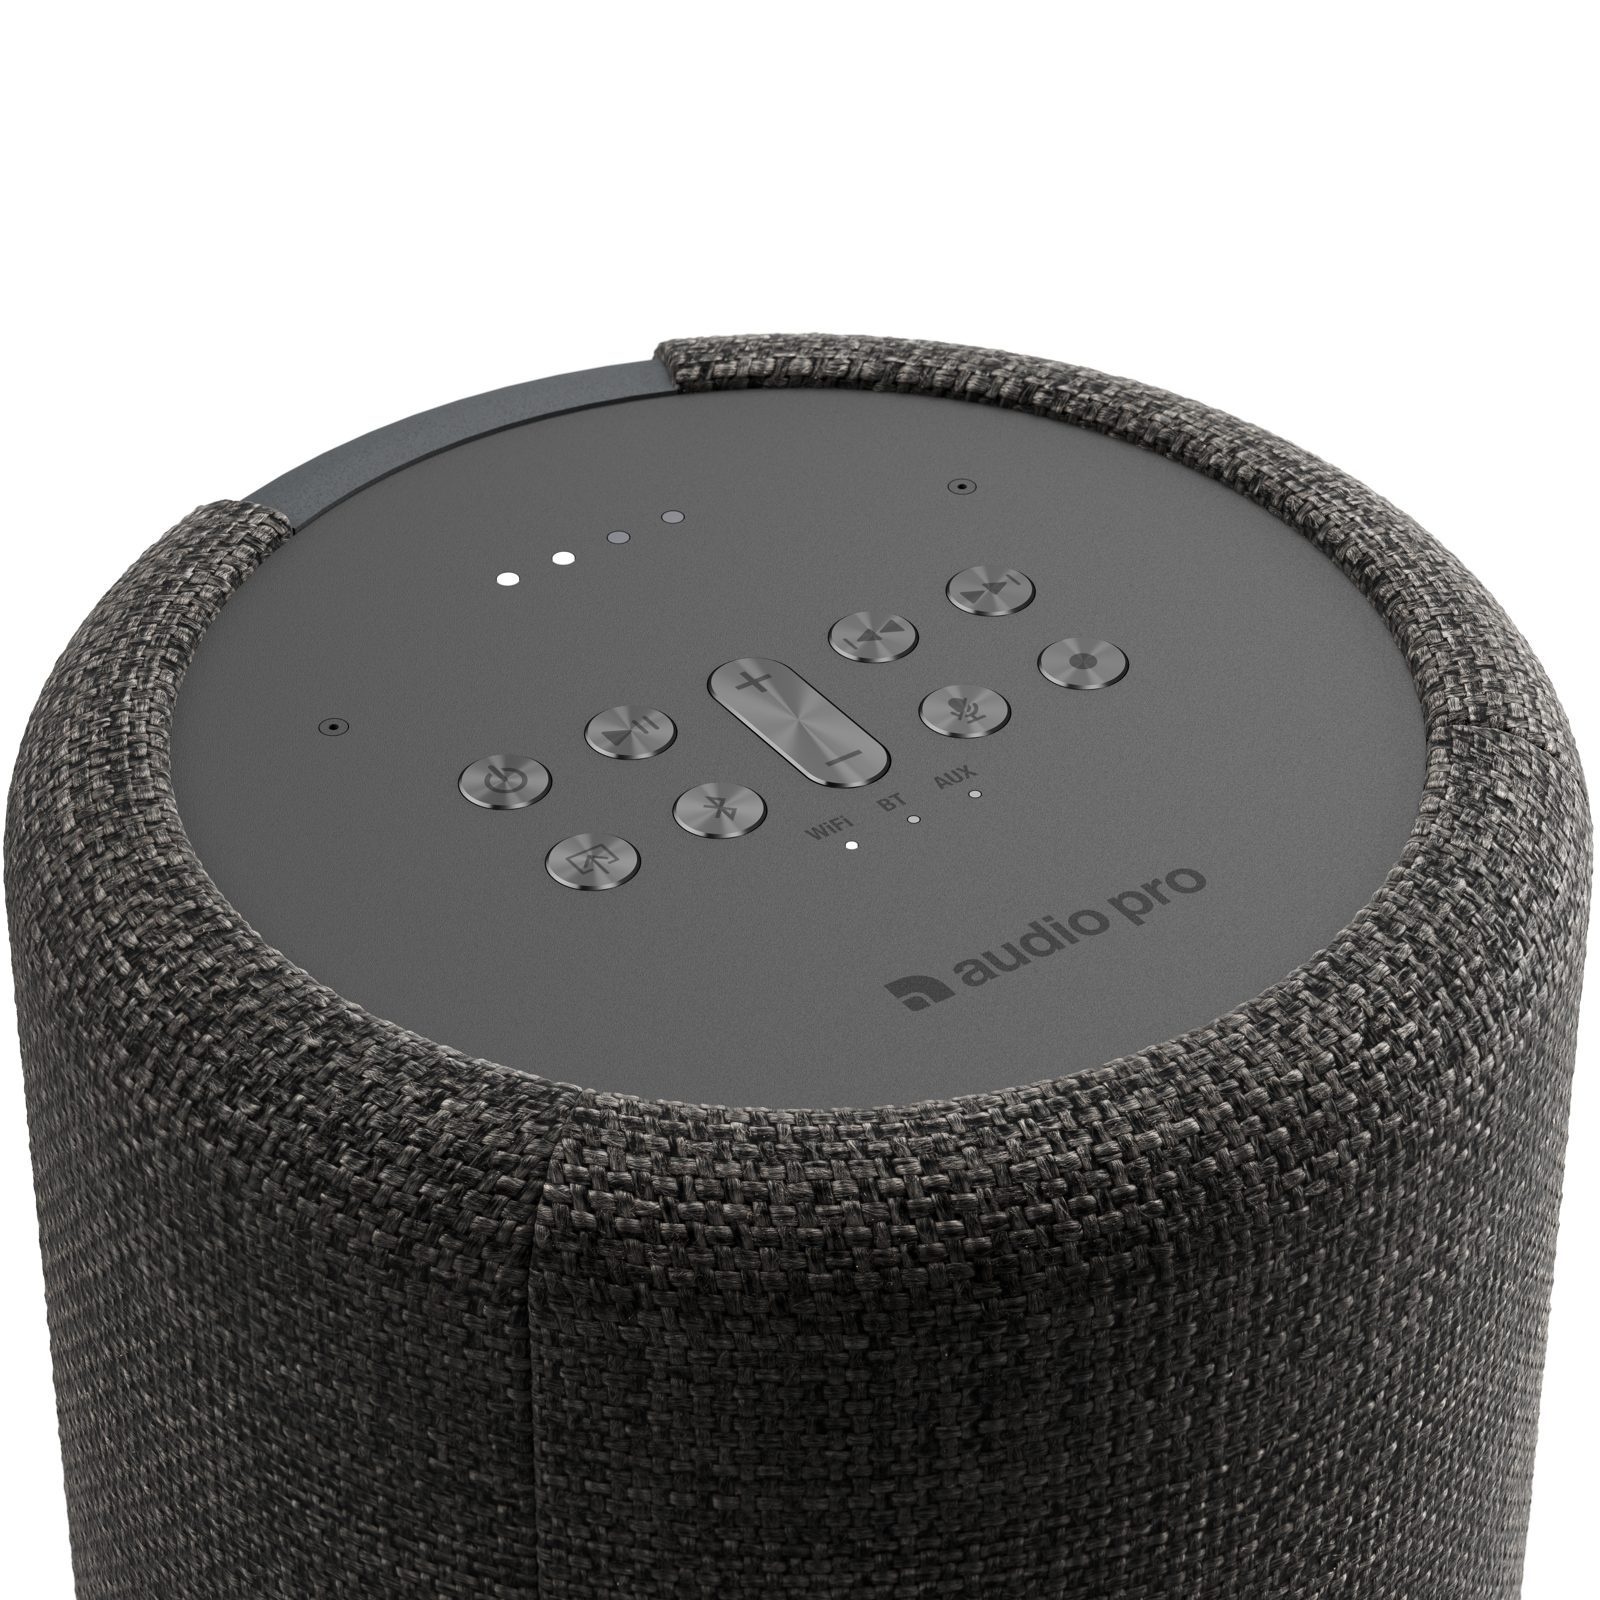 2 Google Smarter Speaker Dunkelgrau Home Pro Audio Assistant & AirPlay Lautsprecher